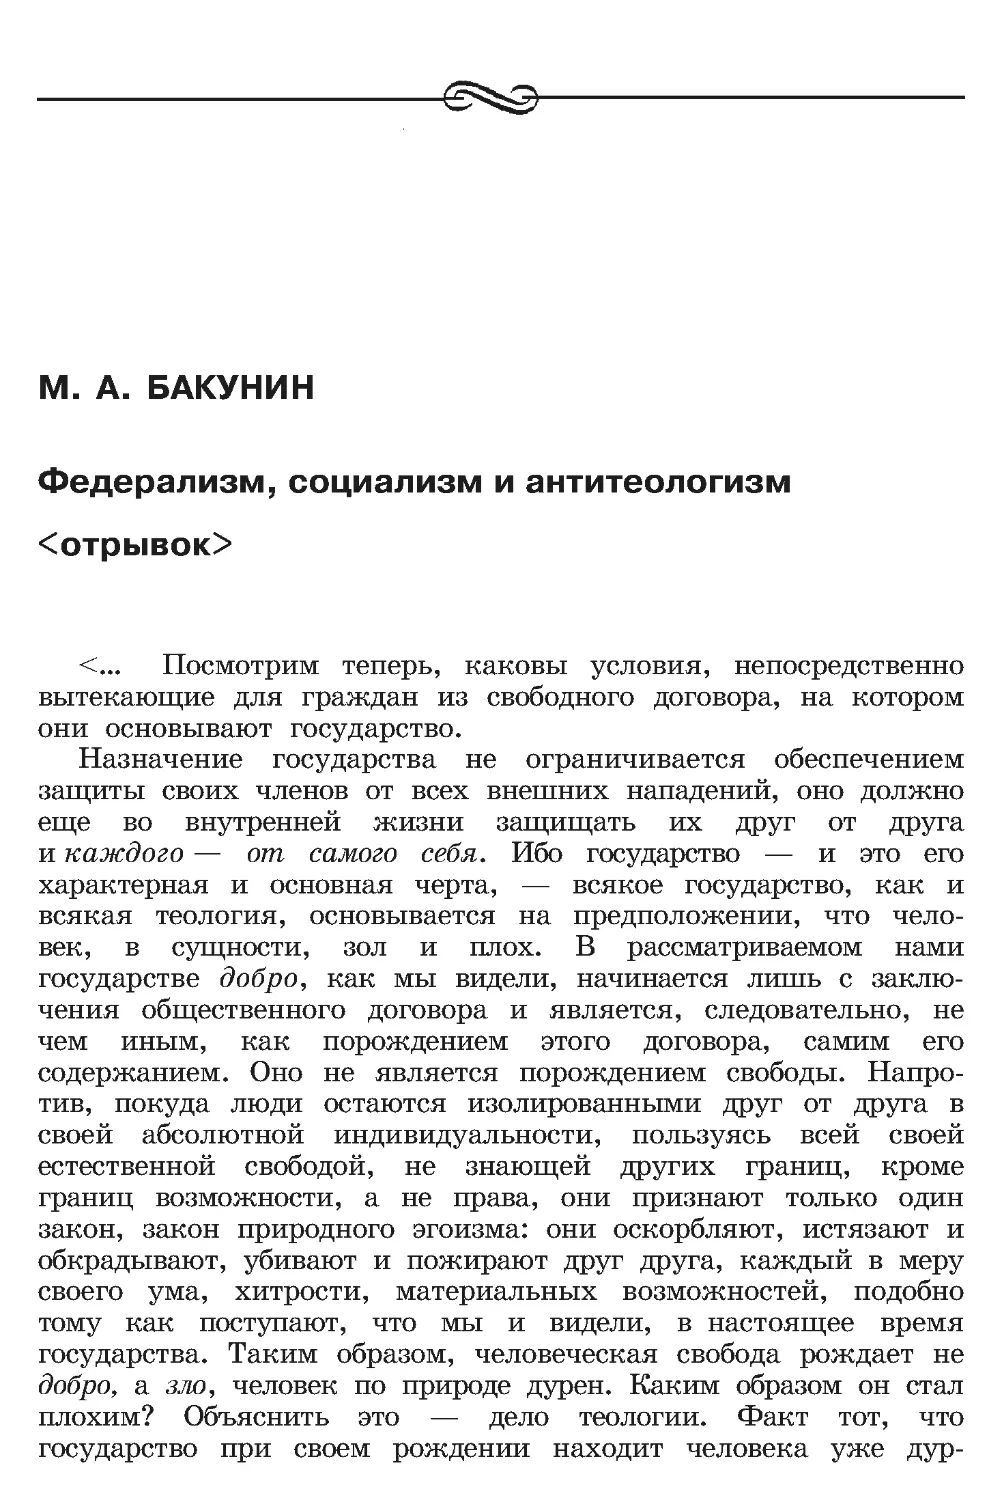 М. А. Бакунин. Федерализм, социализм и антитеологизм